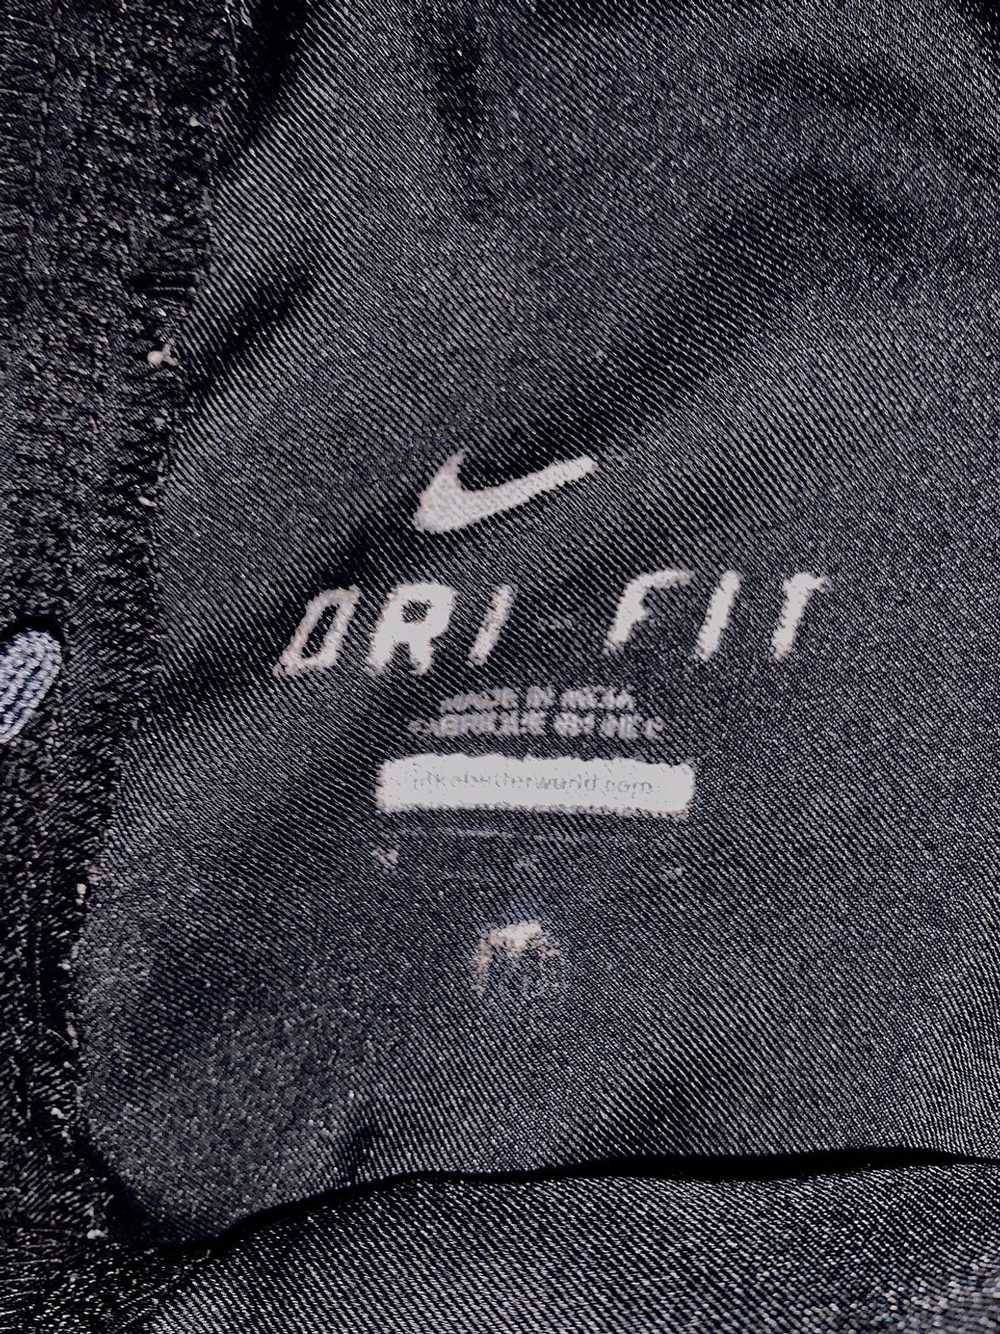 Nike Early 2000’s Banded Sweatpants - image 6